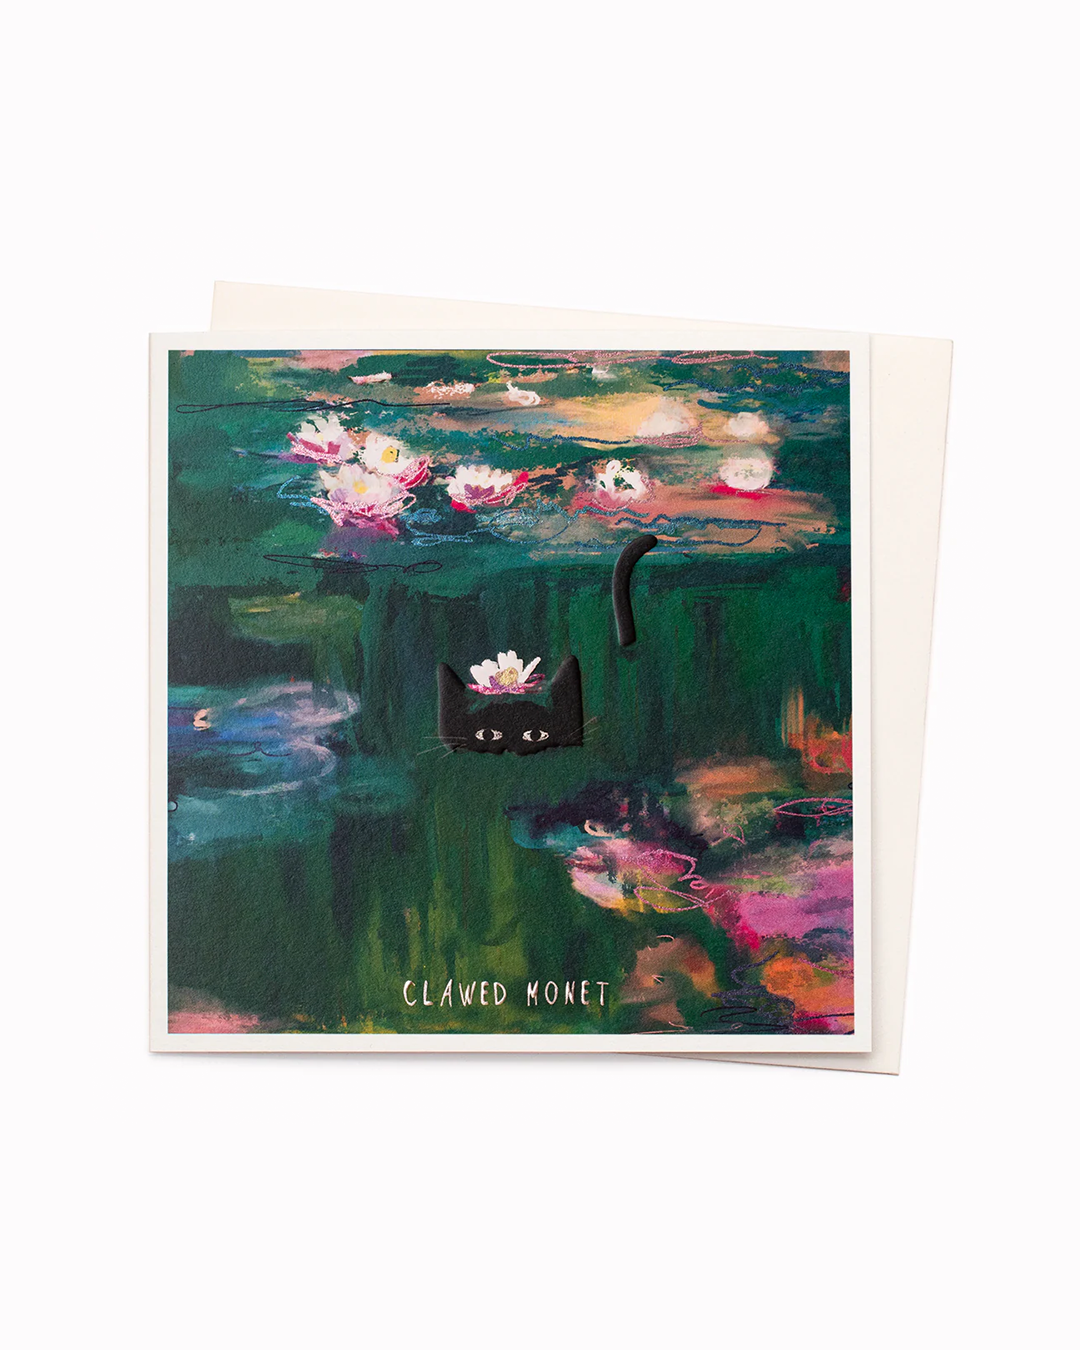 Clawed Monet ✍︎ Art Pun Greeting Card